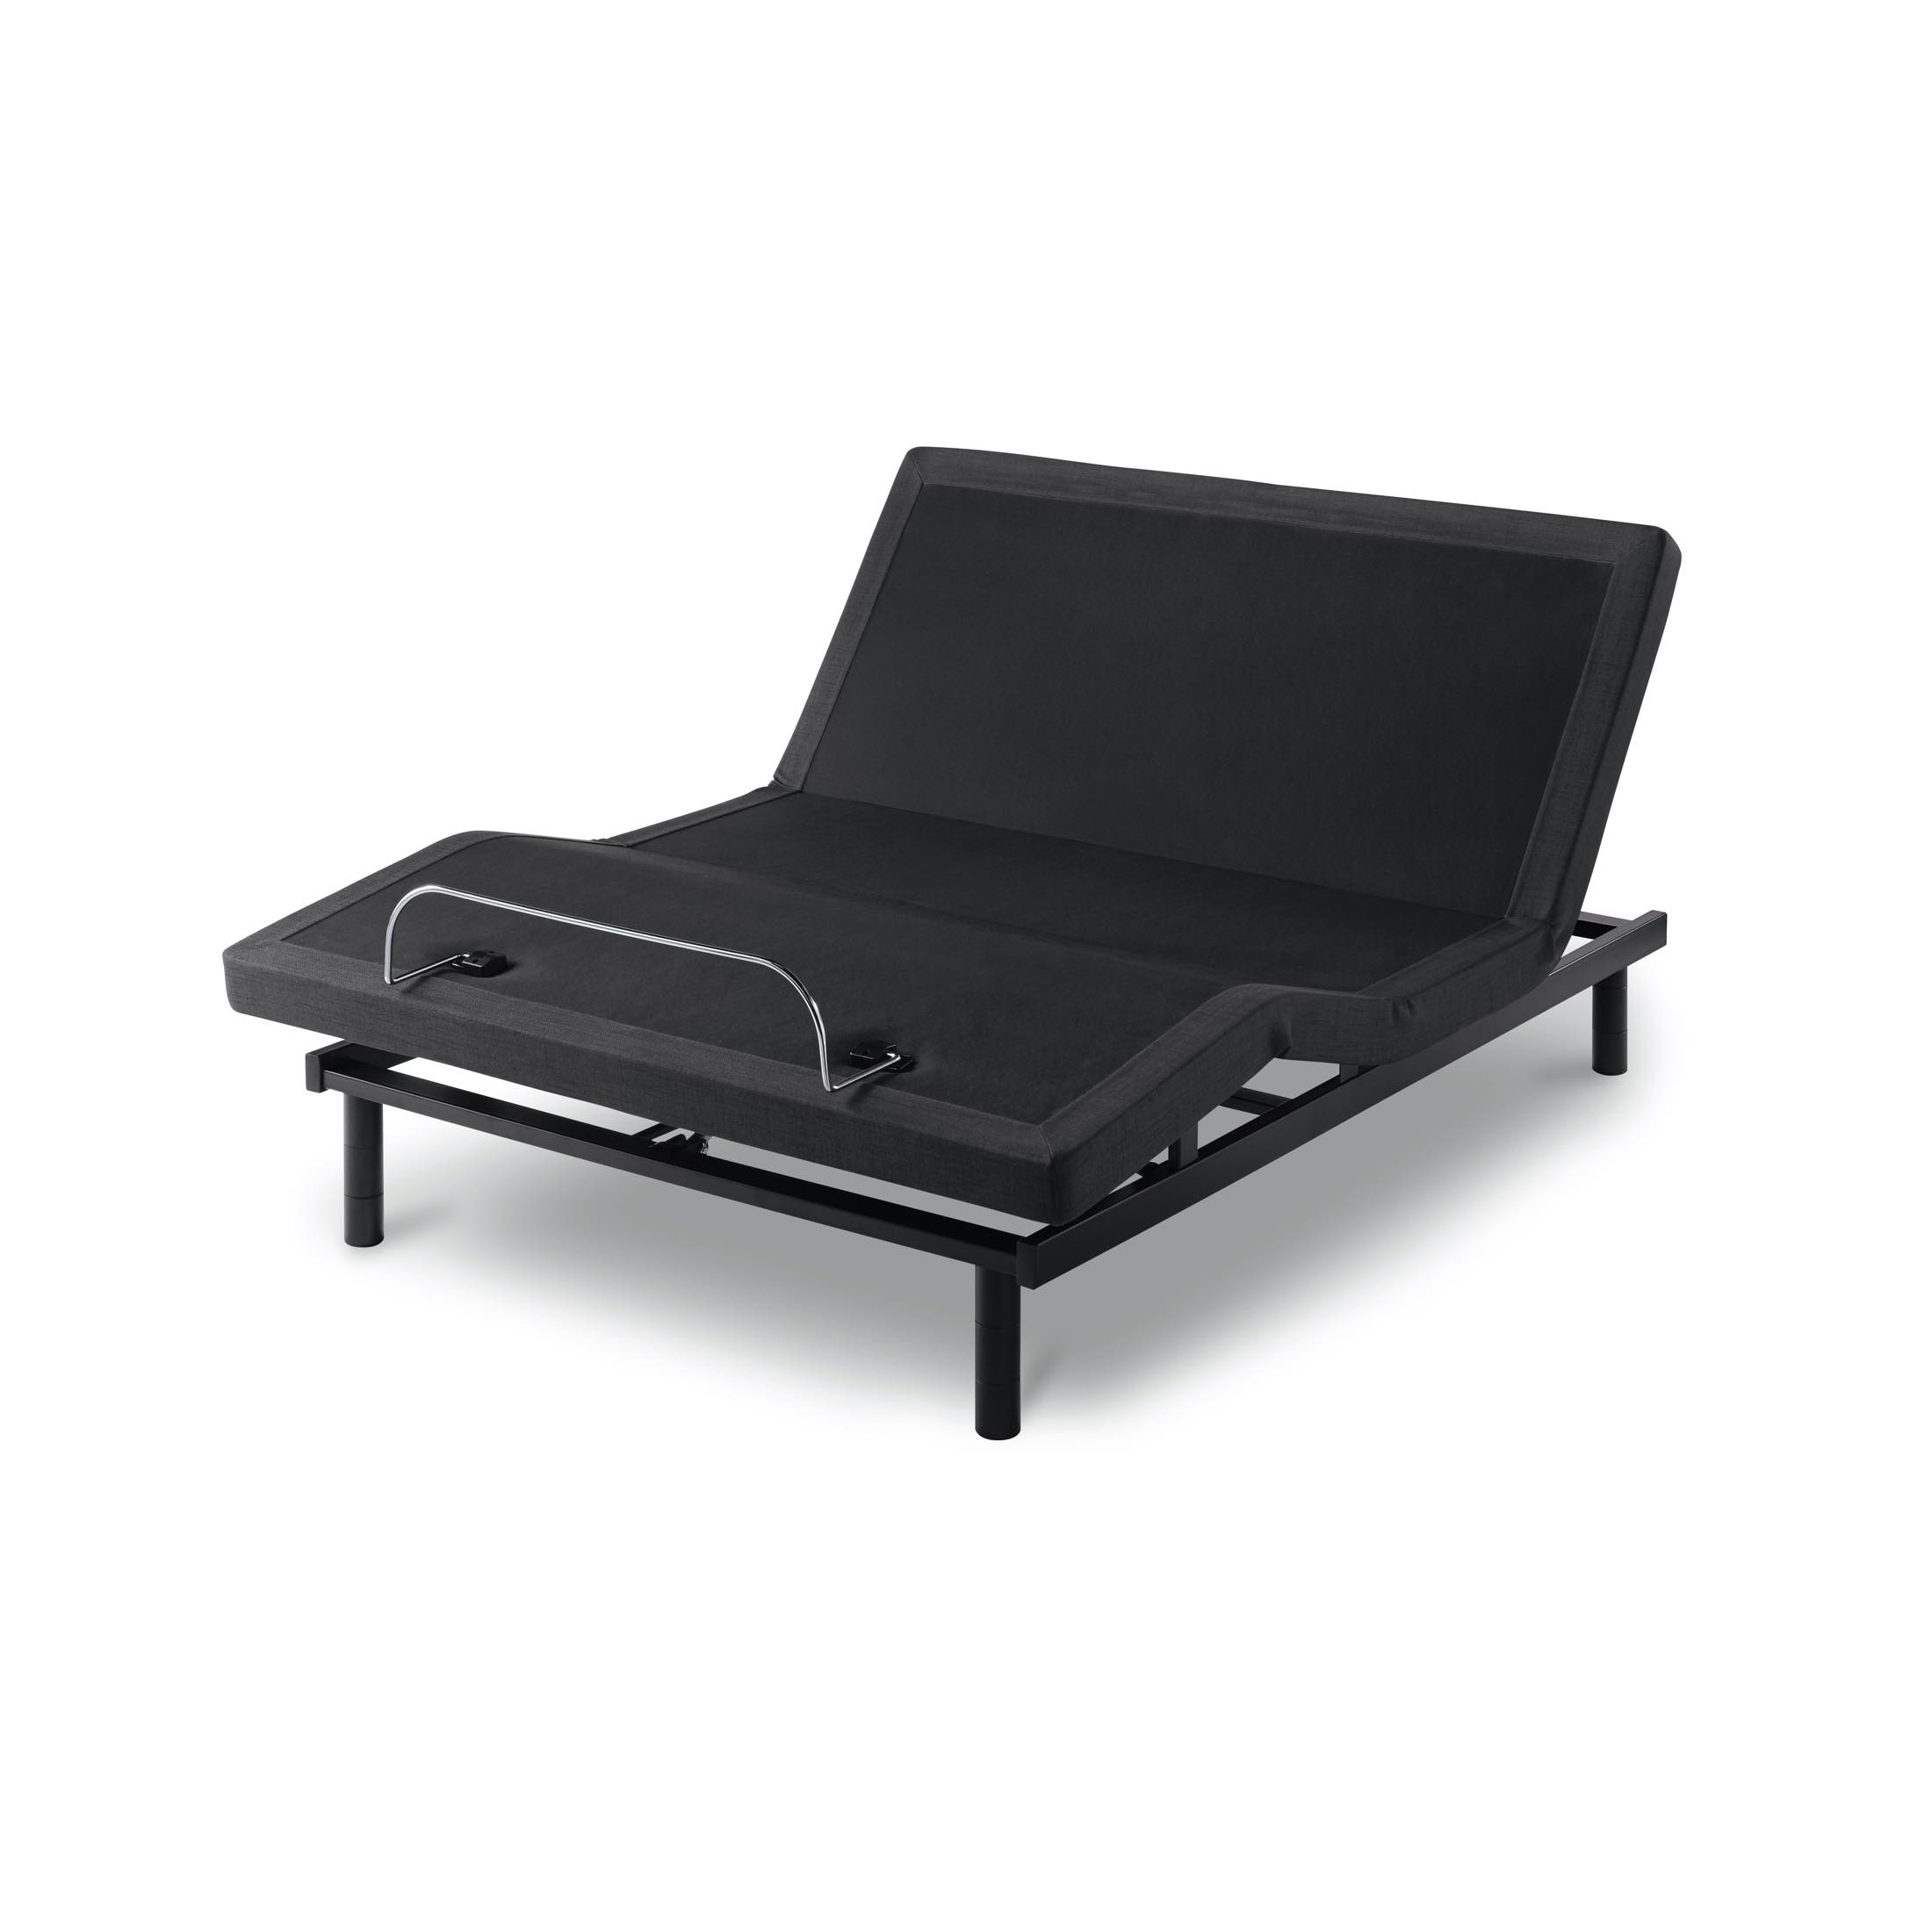 Serta Motion Essentials Adjustable Bed, King Size Electric Adjustable Bed Frame With Massage